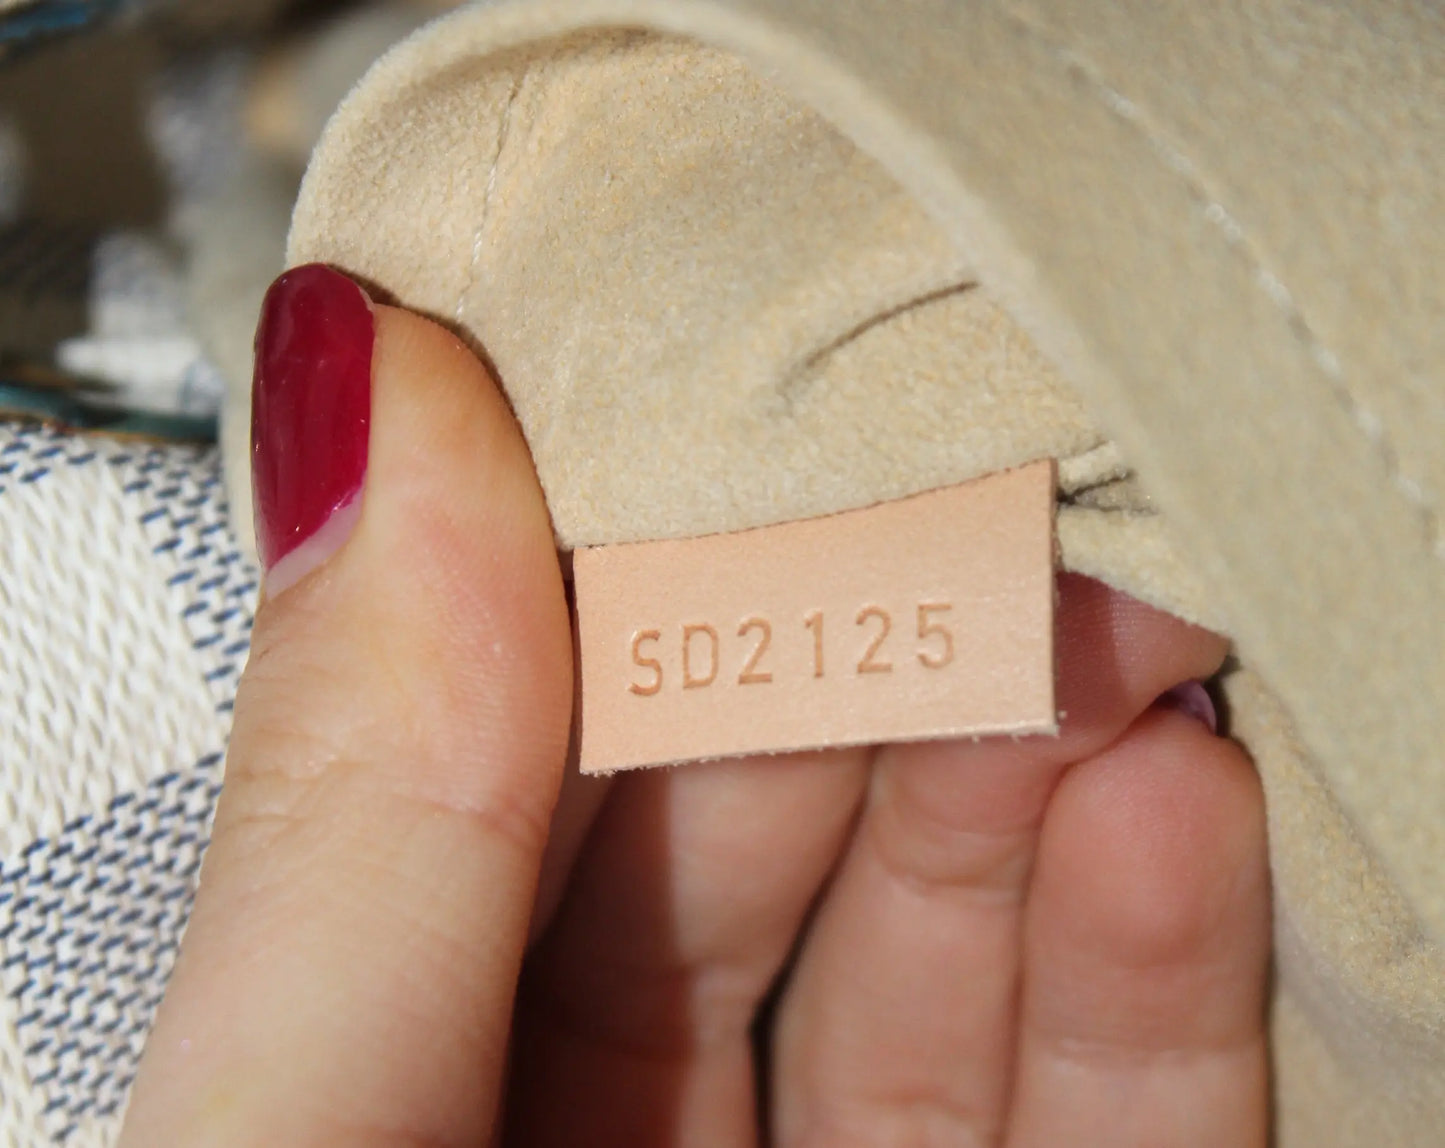 Louis Vuitton SD Date Code Guide – Bagaholic